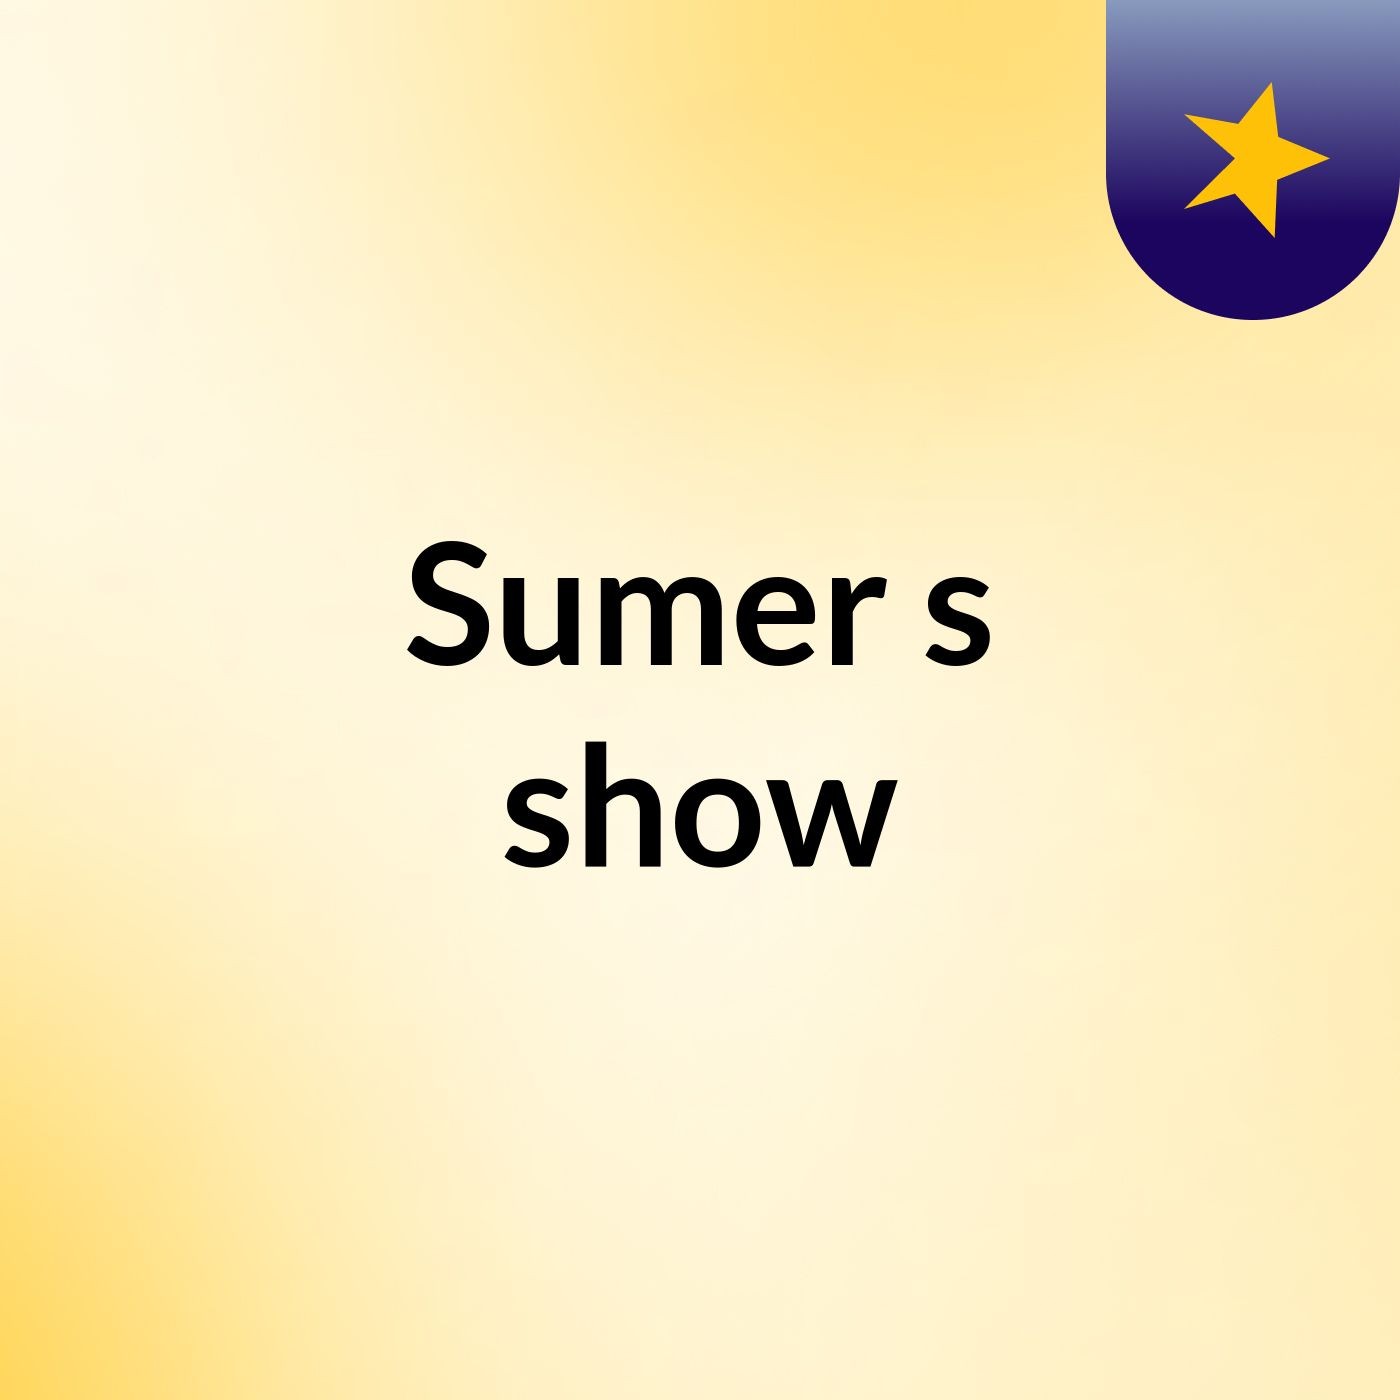 Sumer's show